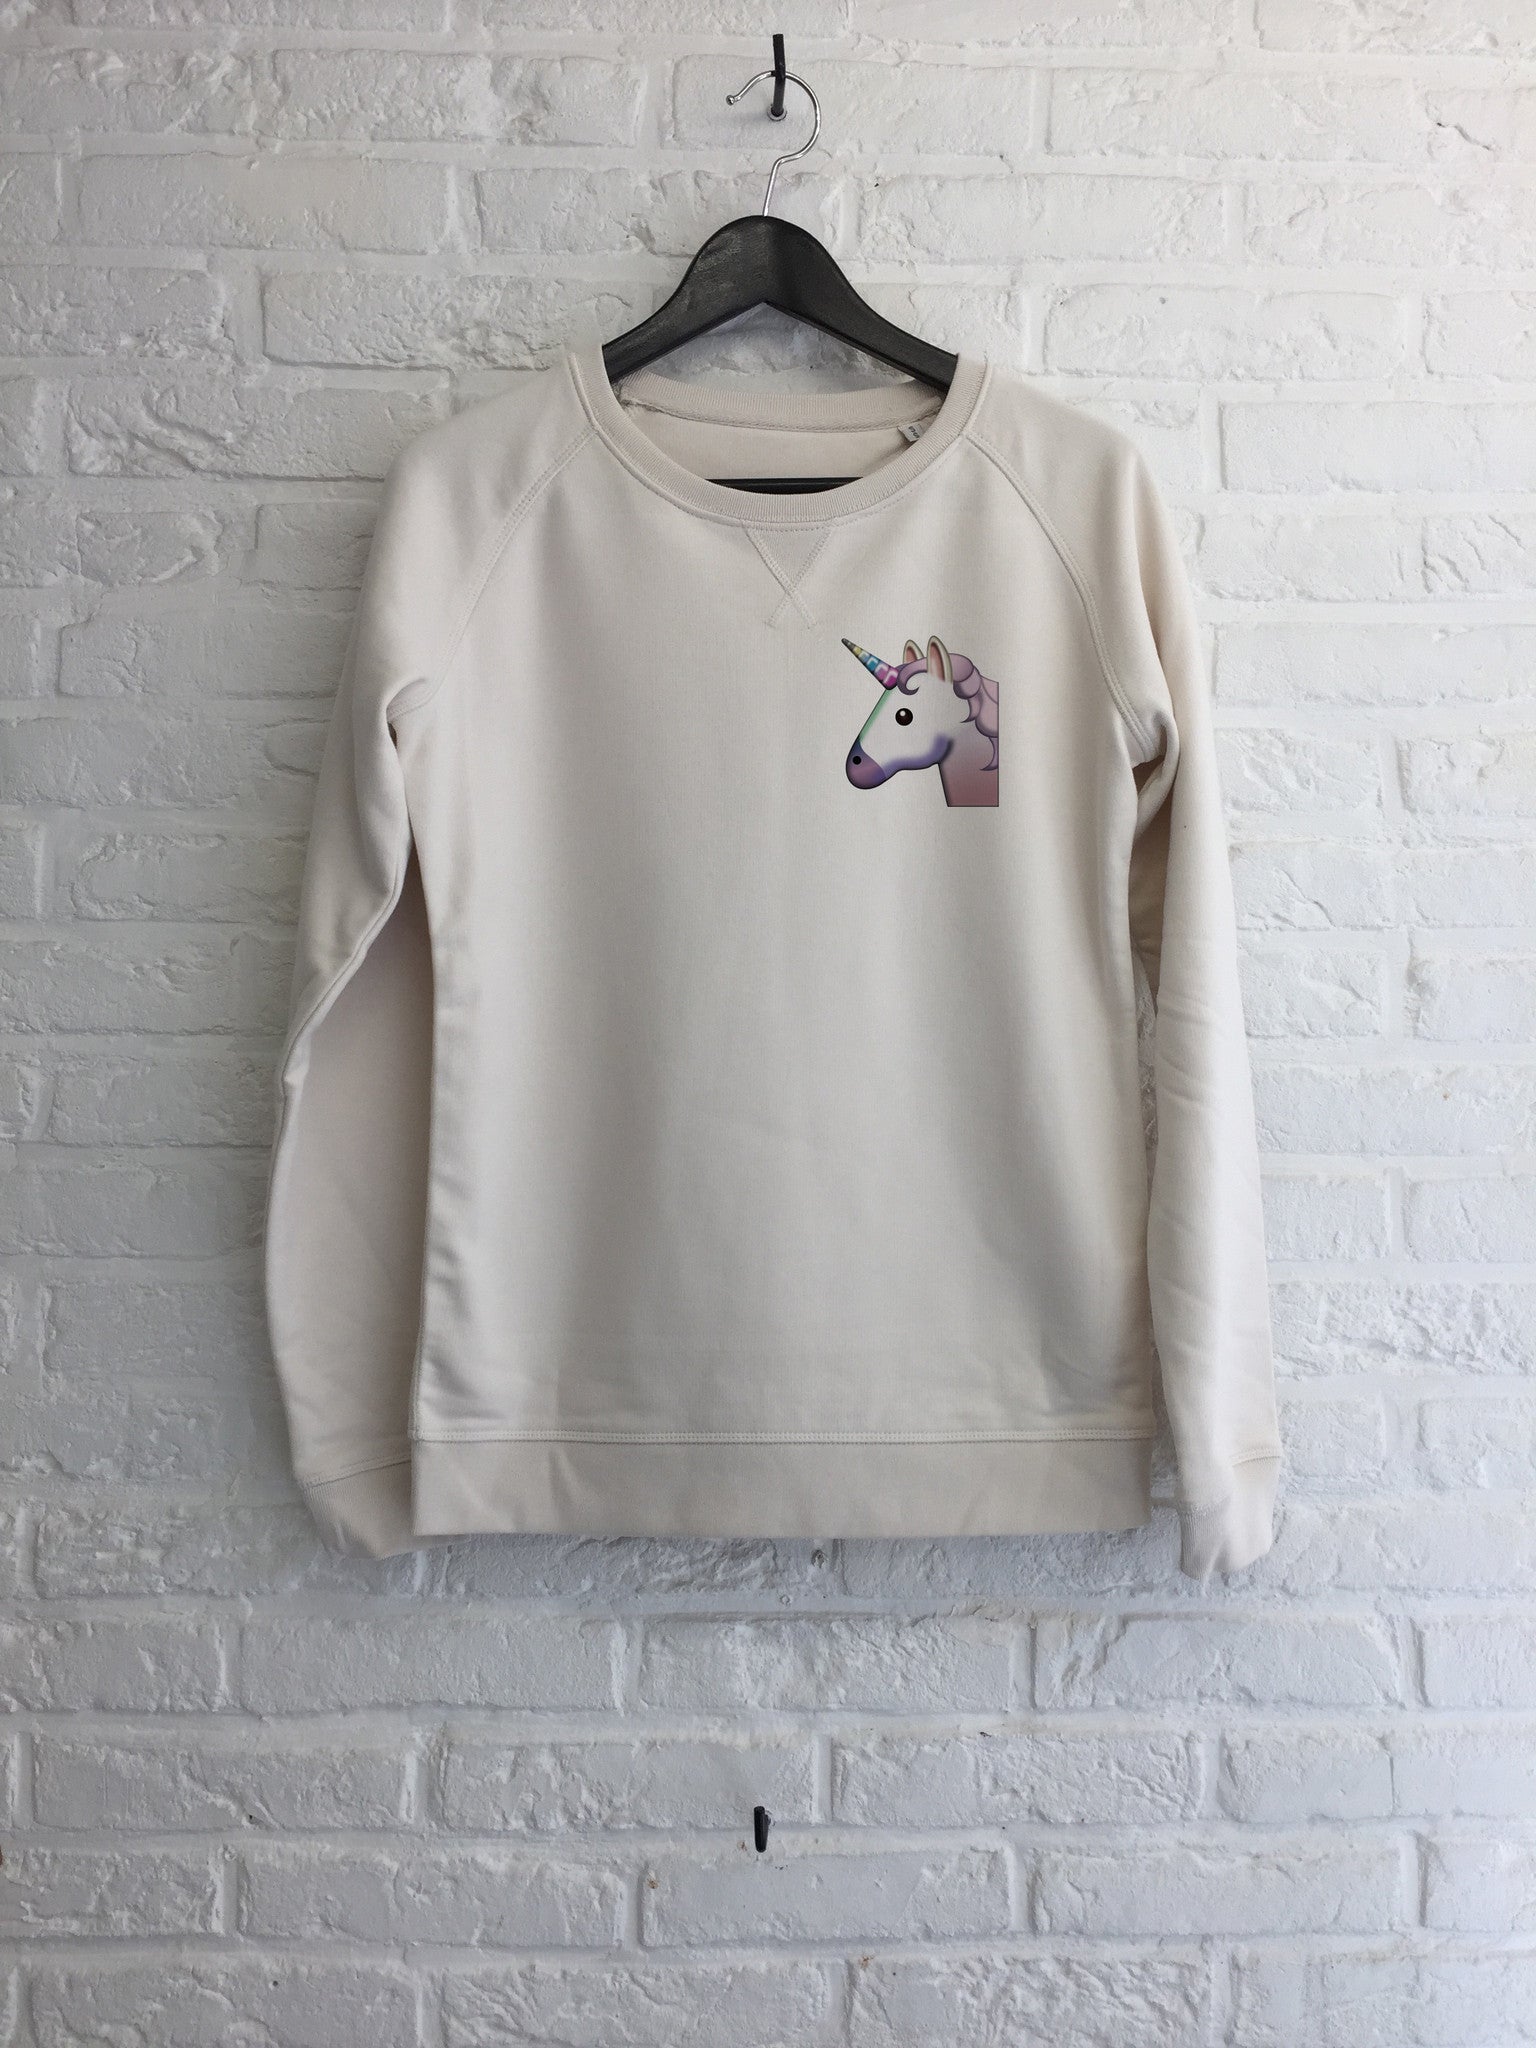 Licorne Emoji - Sweat - Femme-Sweat shirts-Atelier Amelot